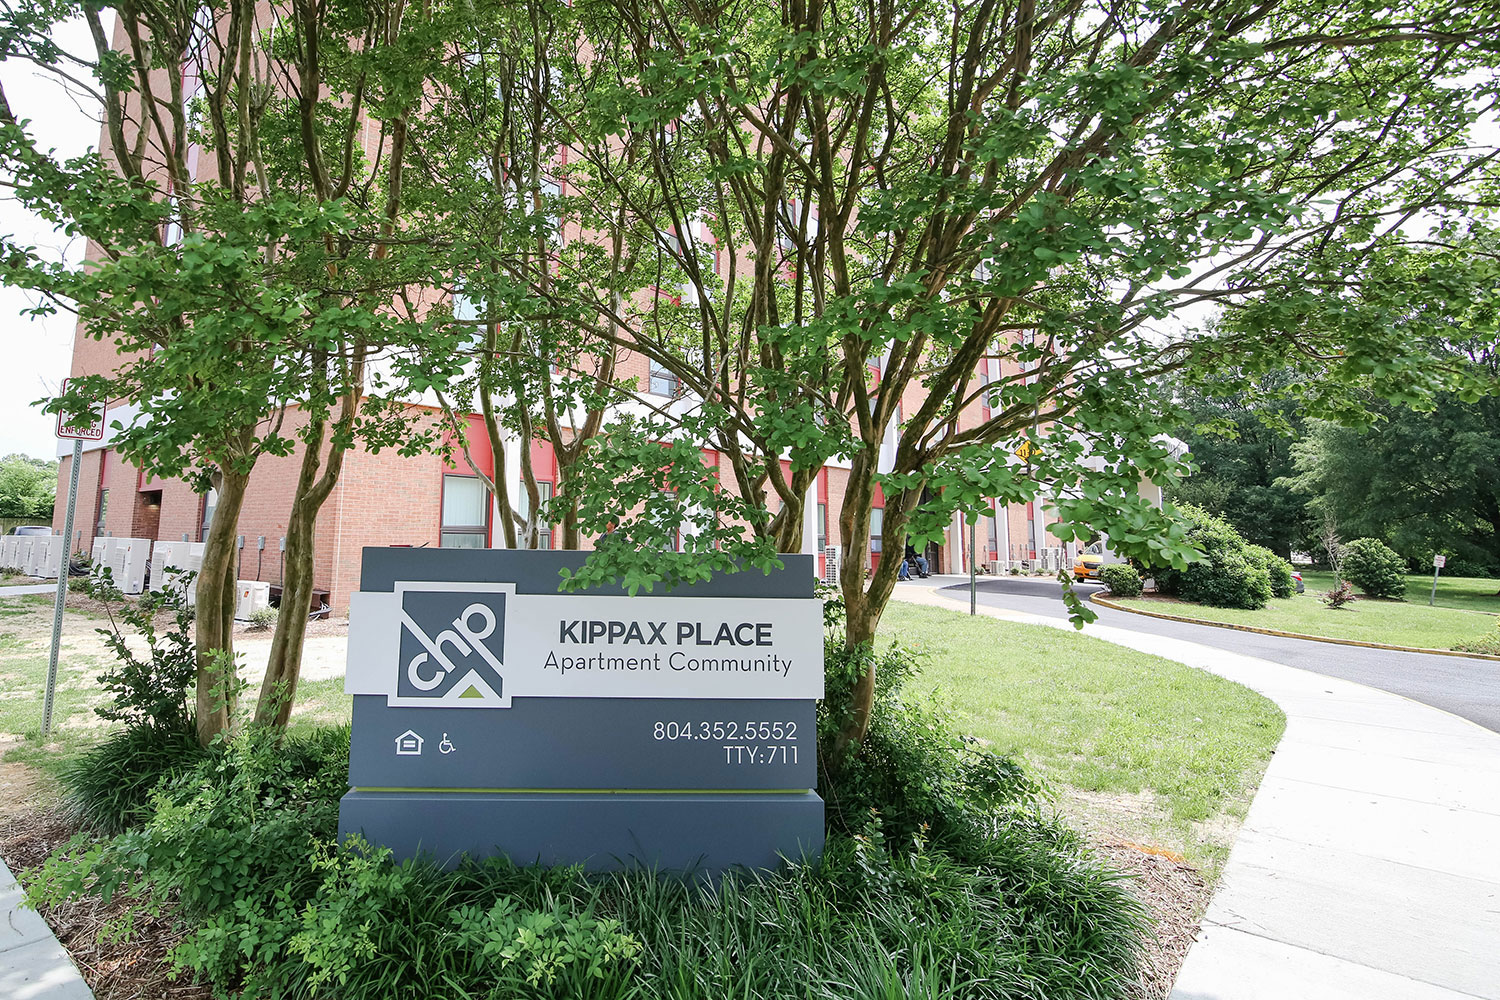 Kippax Place sign